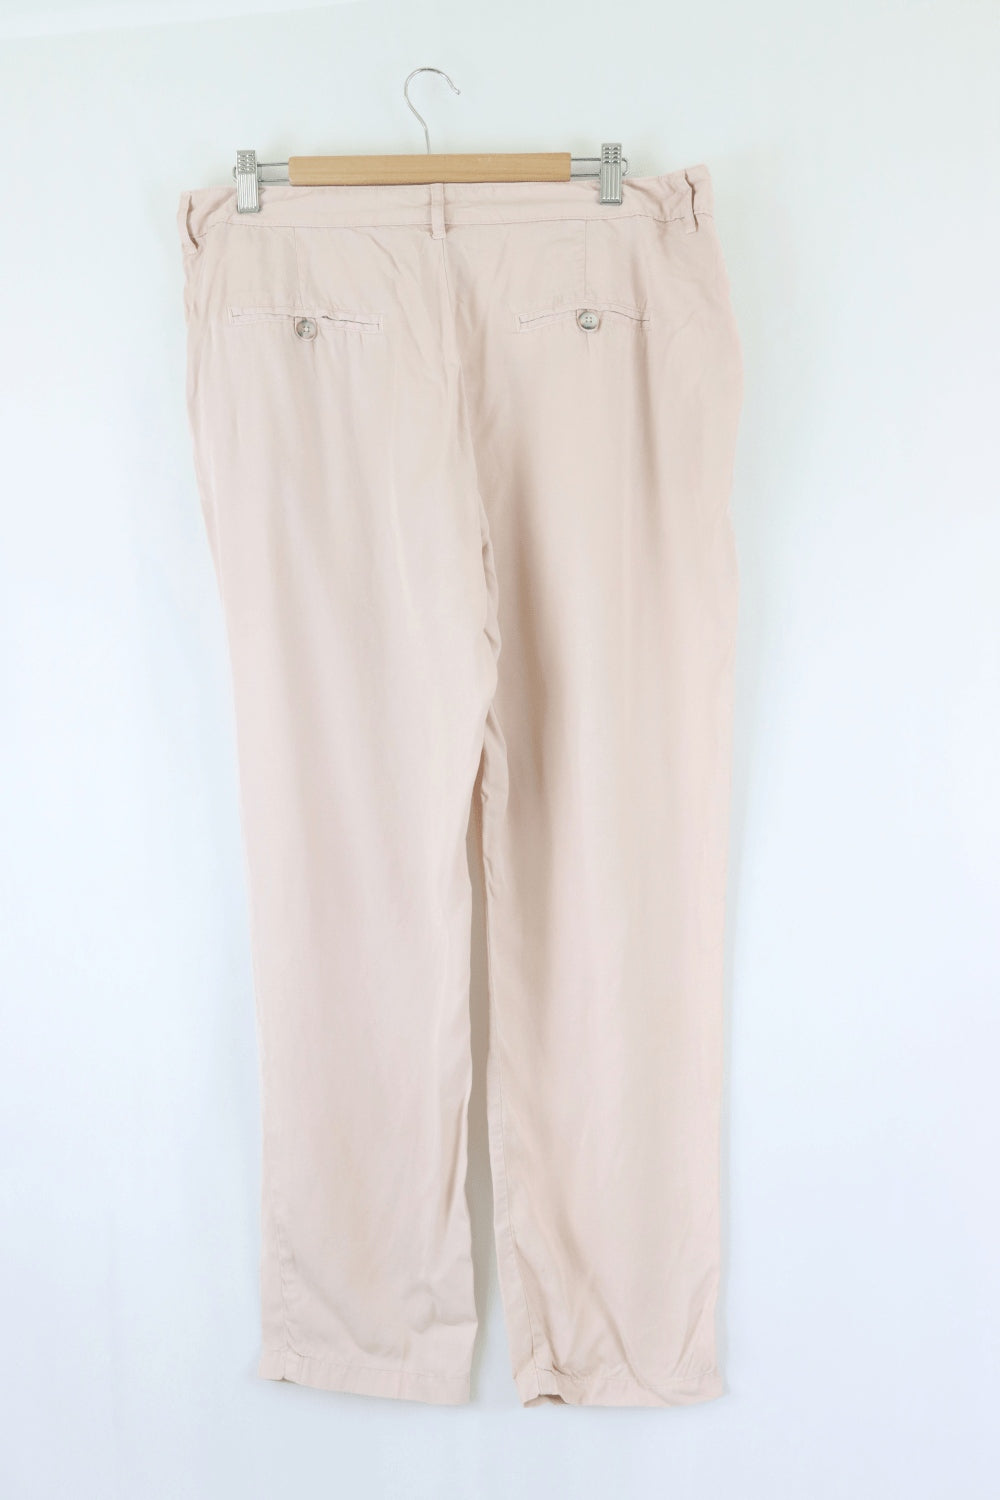 Zara Pink Pants 10